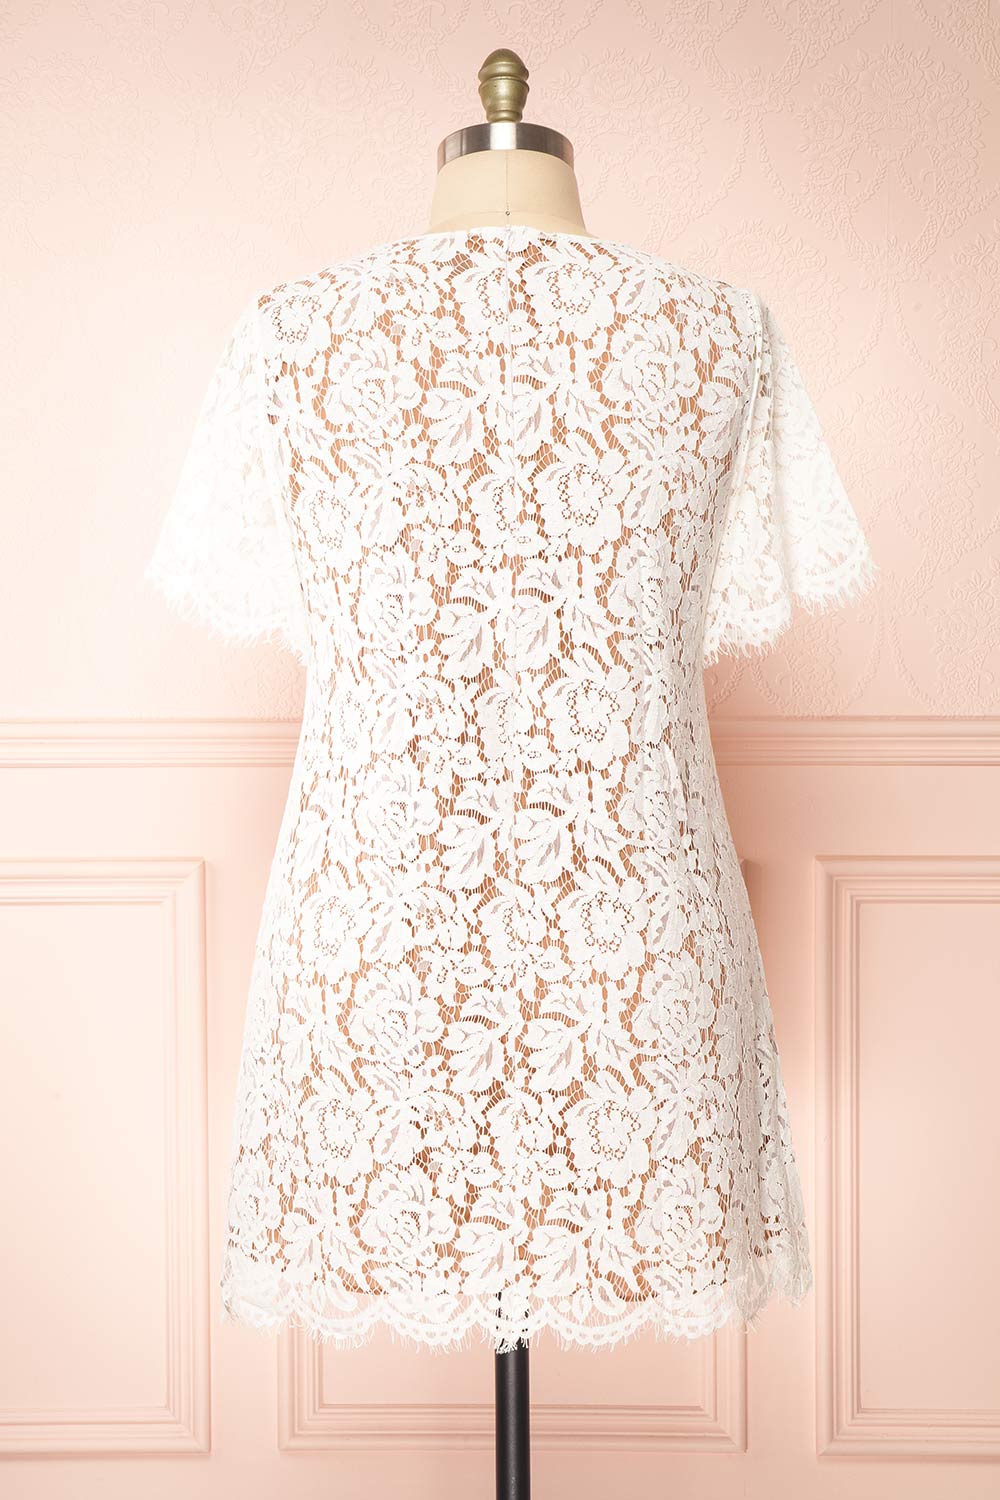 Apama White | Floral Lace Short Sleeve Dress